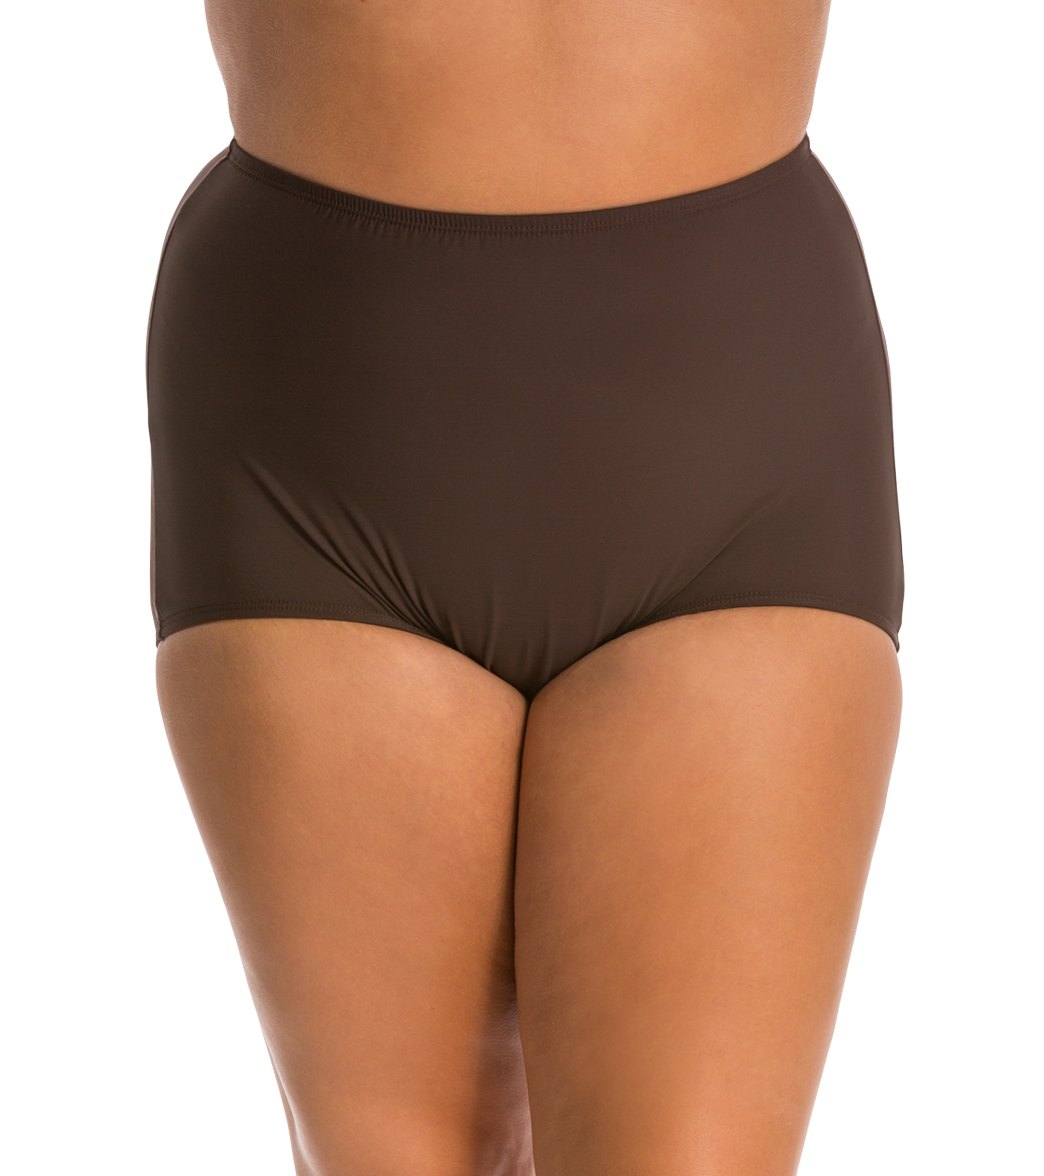 Topanga Plus Size Solid Conservative Brief Bikini Bottom - Brown 22W Nylon/Spandex - Swimoutlet.com